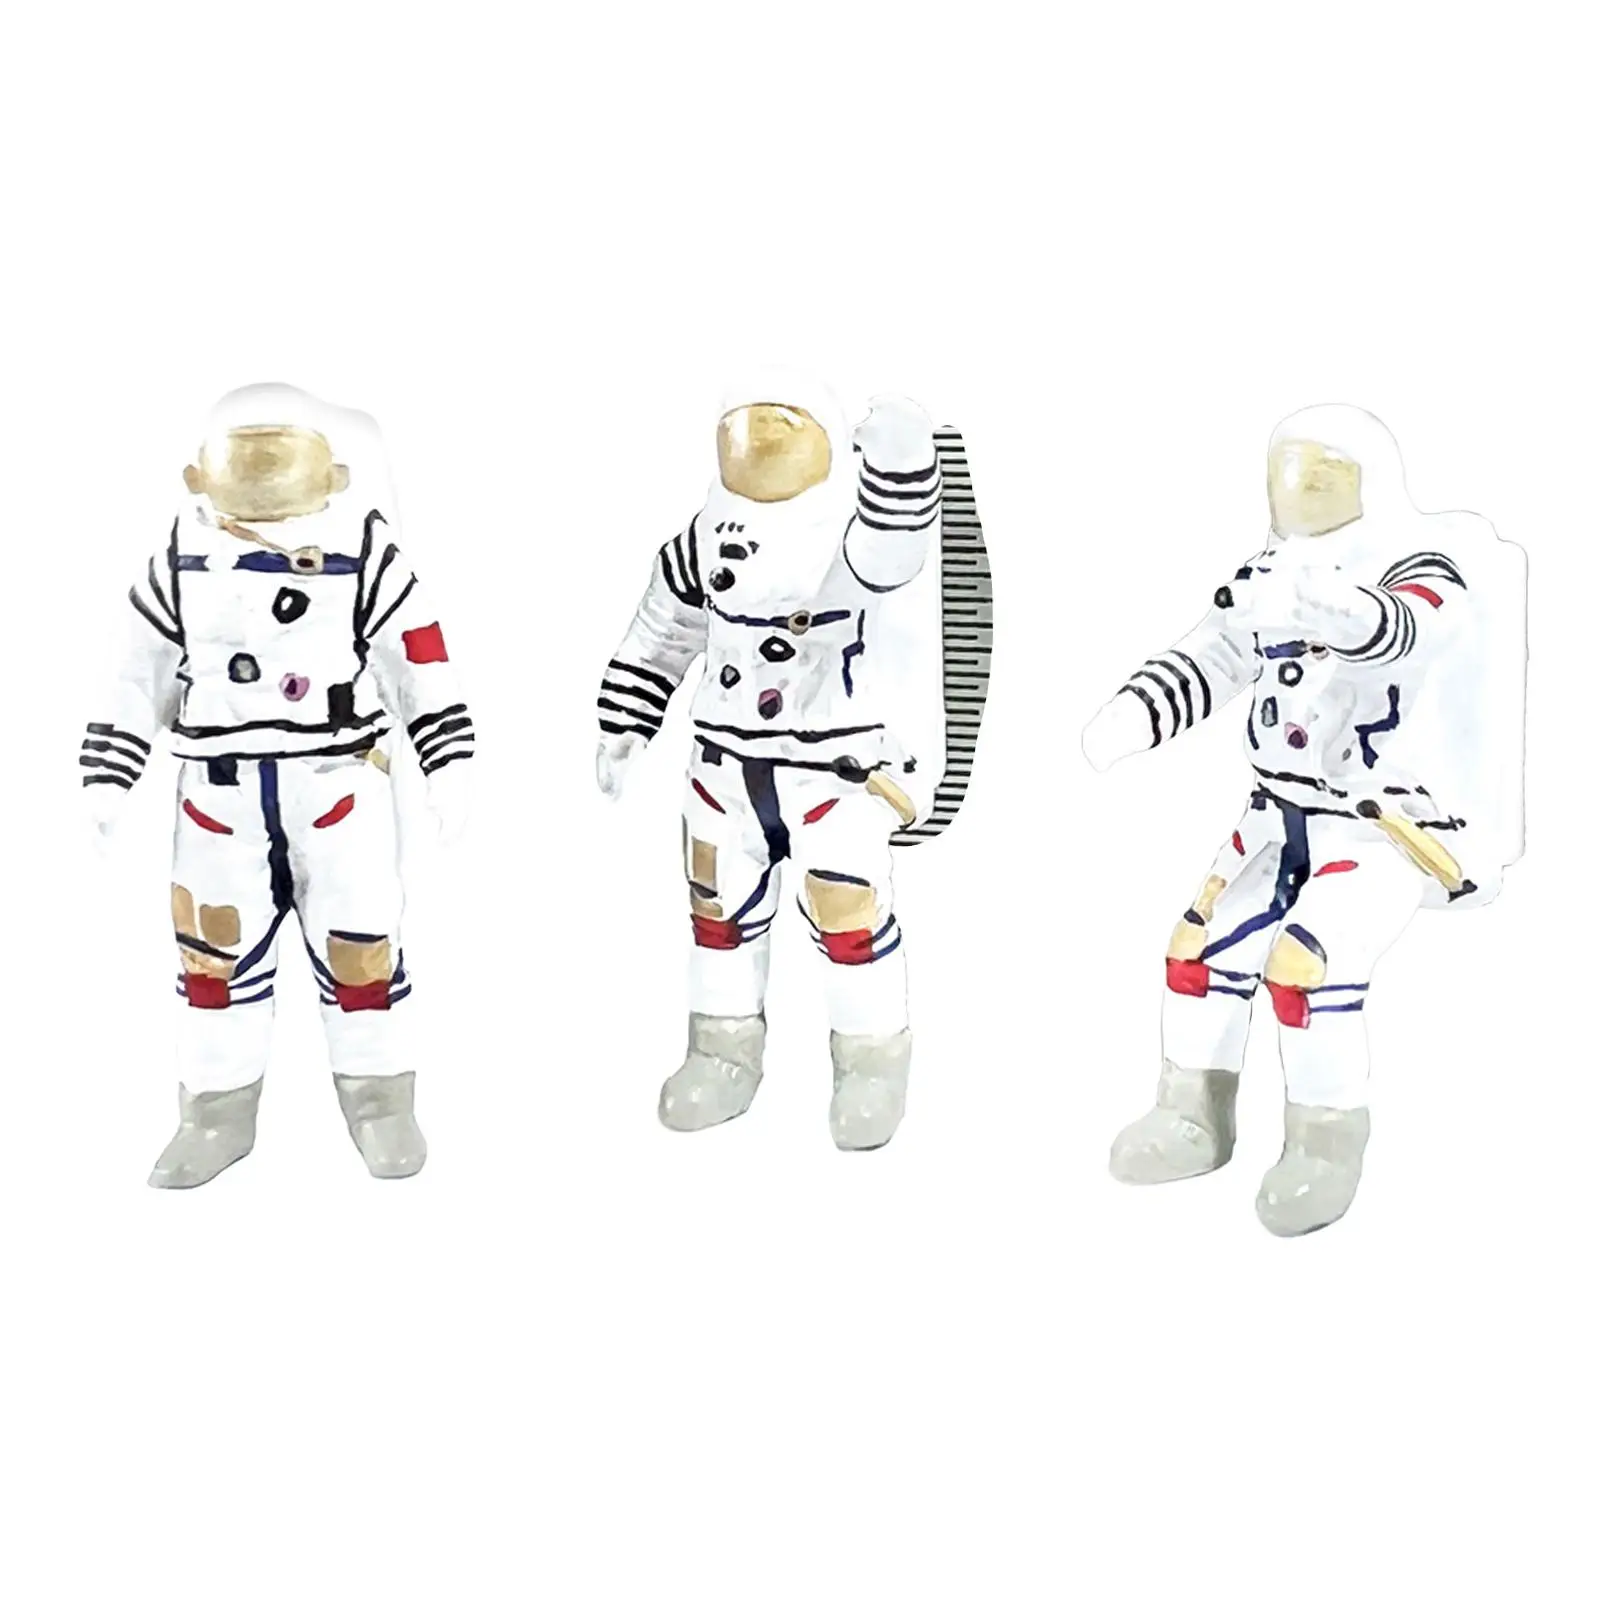 1/64 Scale Astronaut Figurines Spaceman Model, Hand Painted,Miniature Astronaut Action Figure for Scenery Landscape Decor